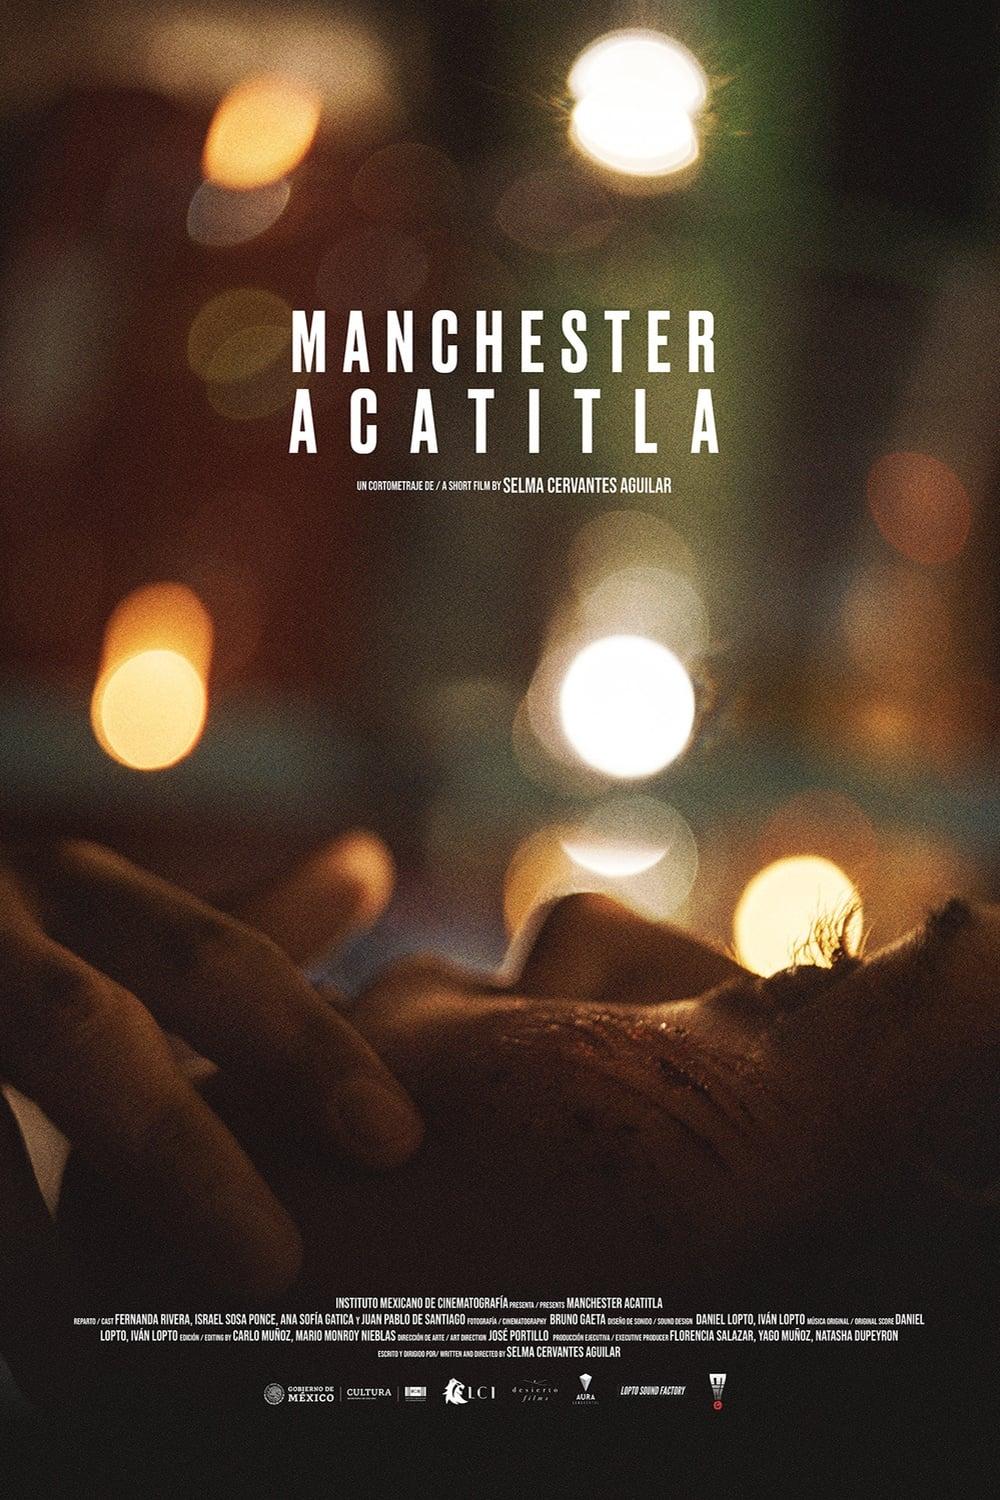 Manchester Acatitla poster